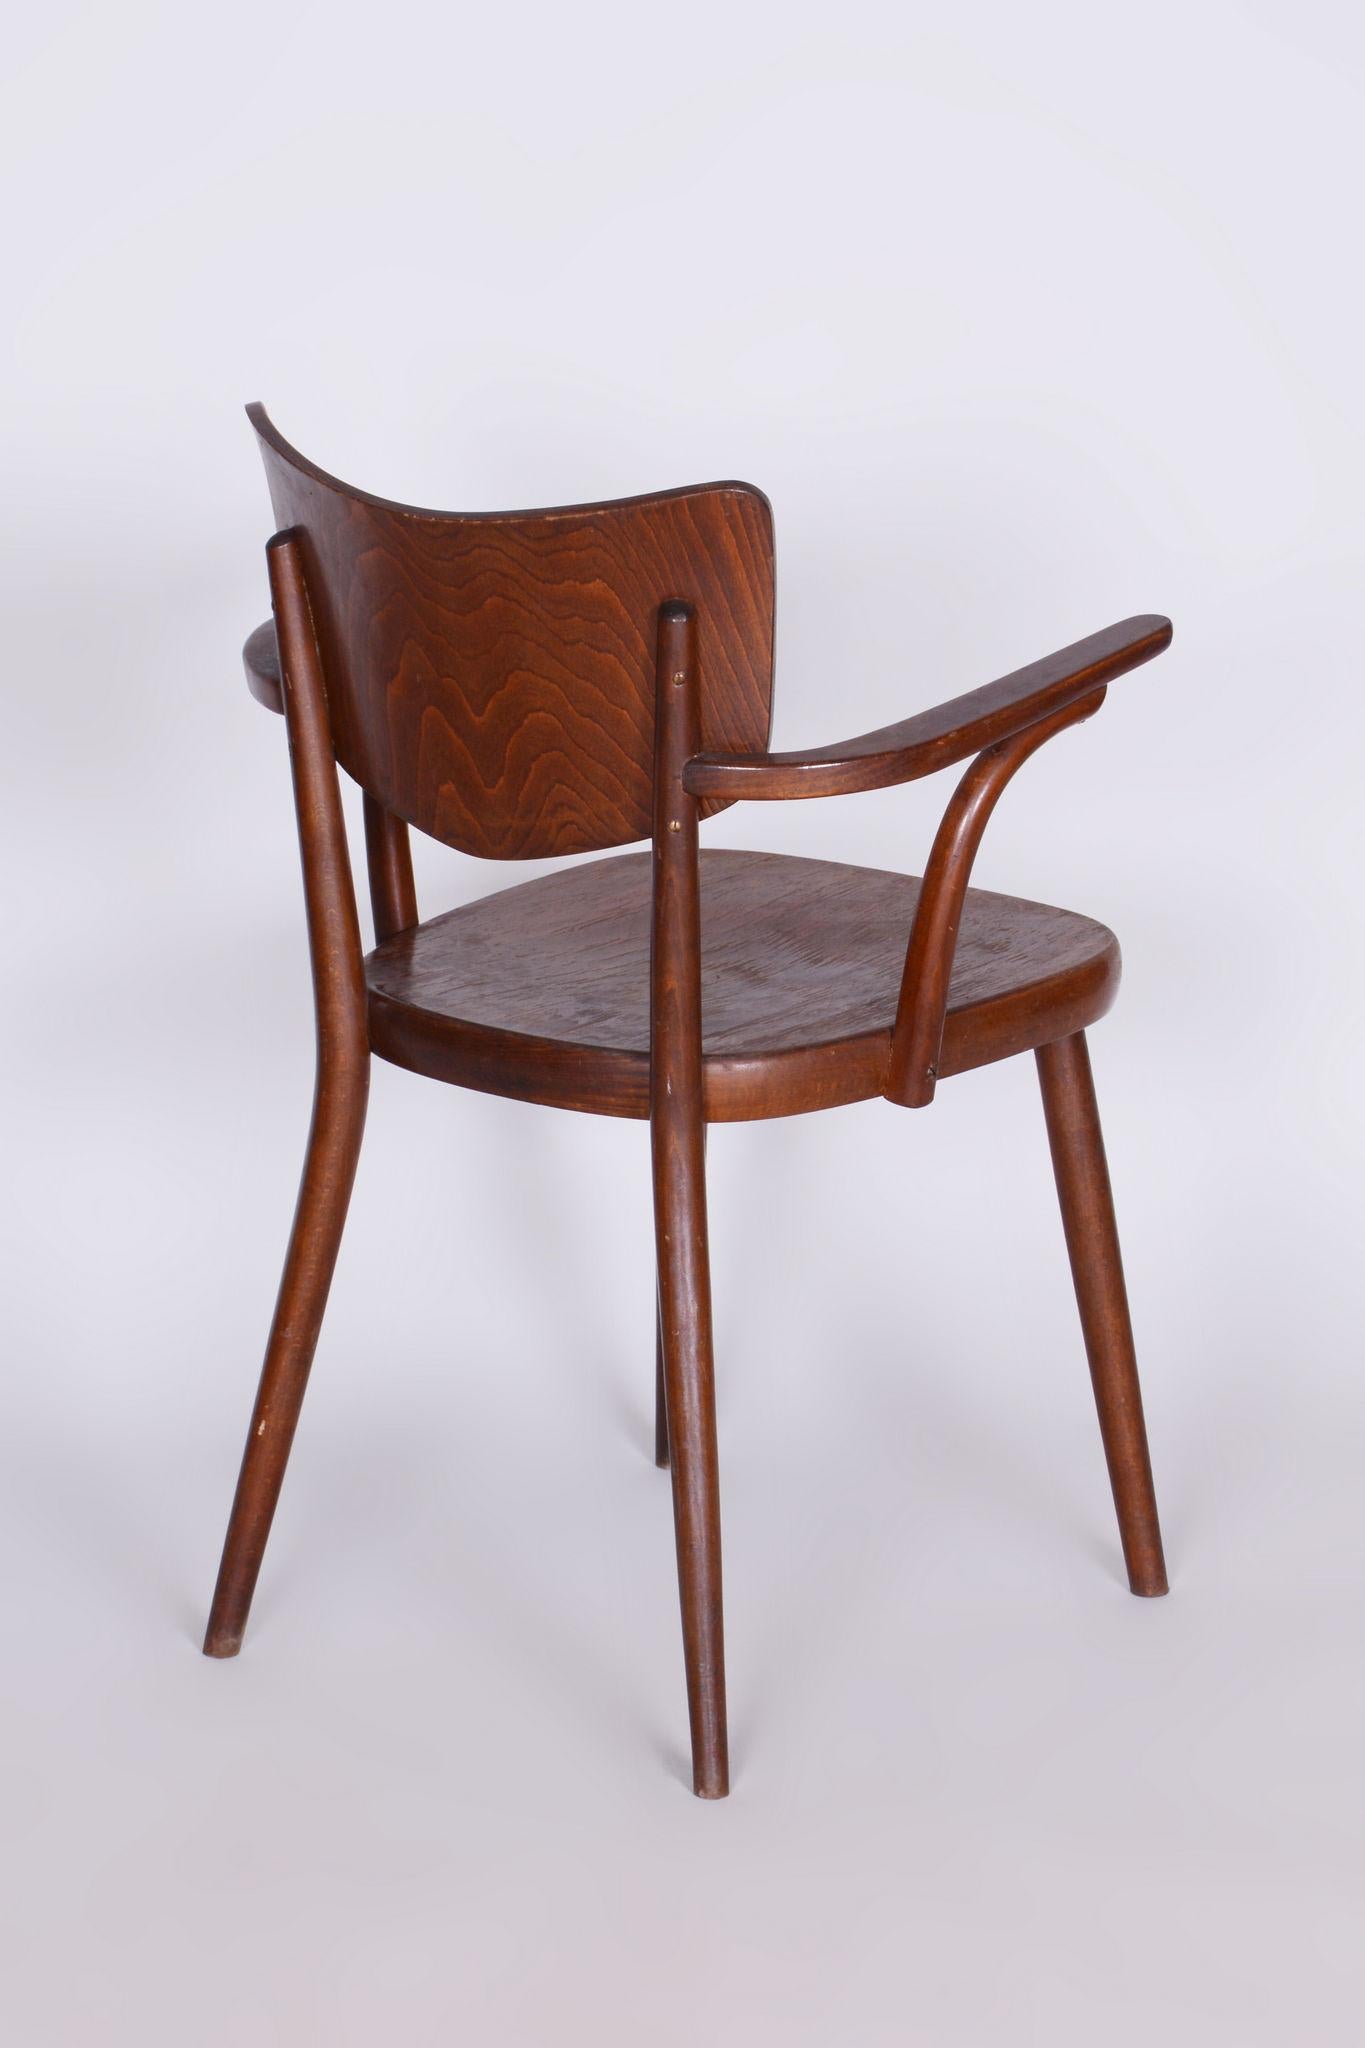 Wood Original ArtDeco Beech Chair with Armrests by Ton, R. Hofman, Czechia, 1940s For Sale